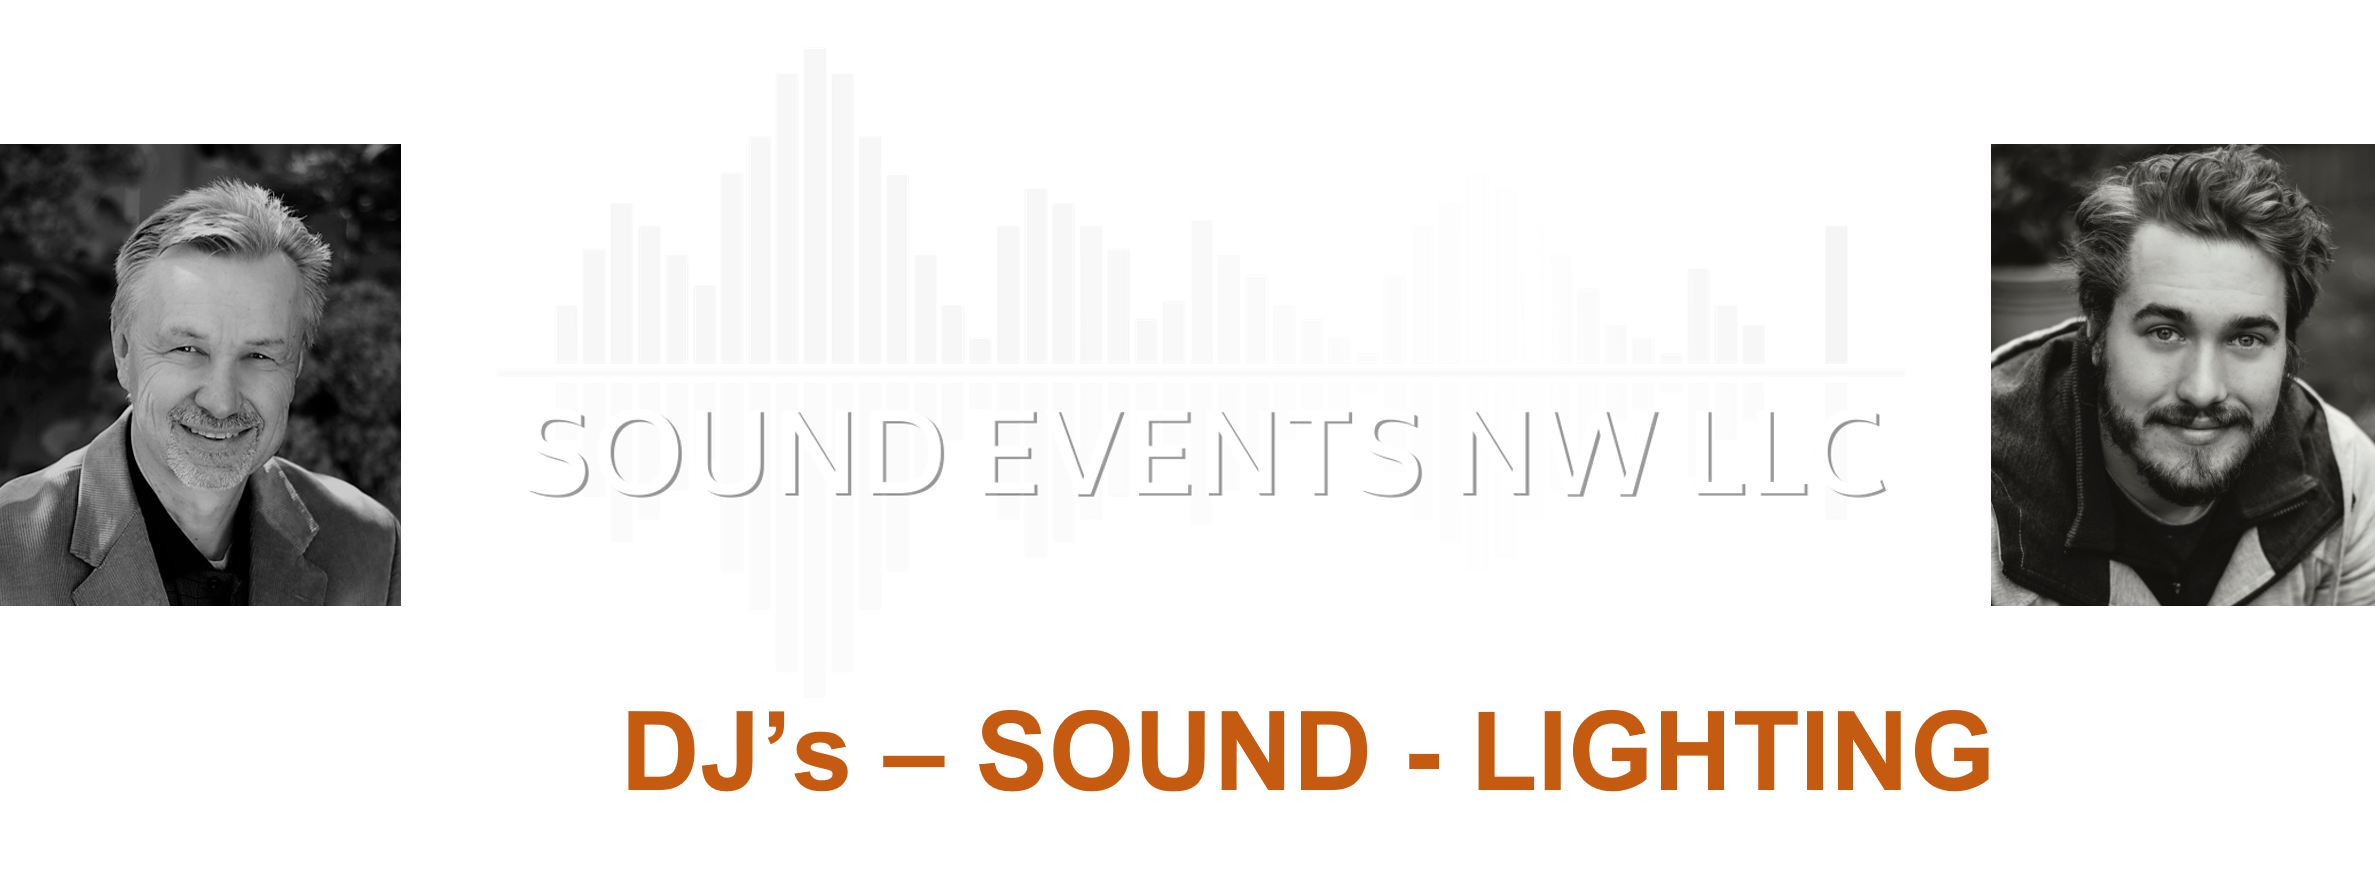 Sound Entertainment